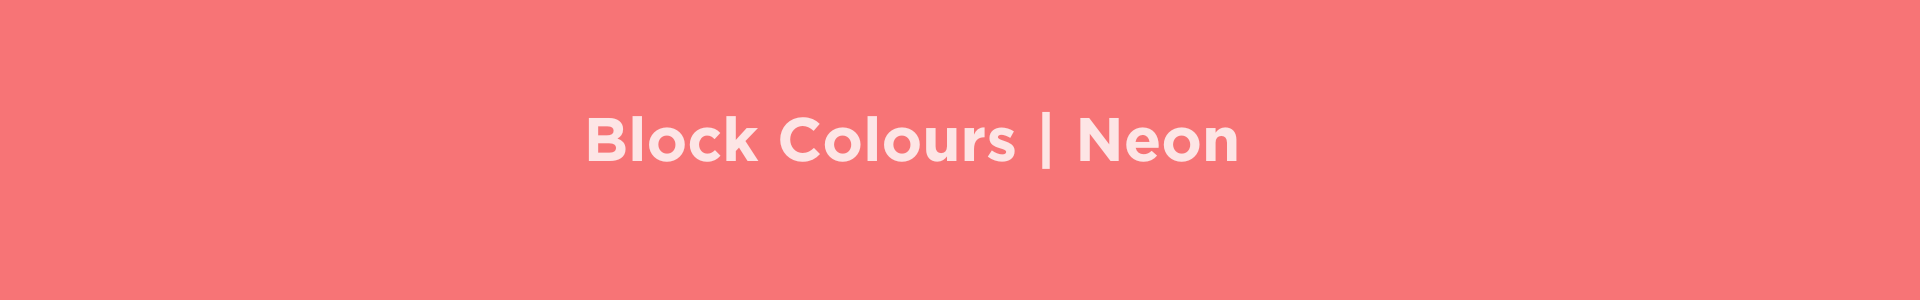 Block Colour | Neon